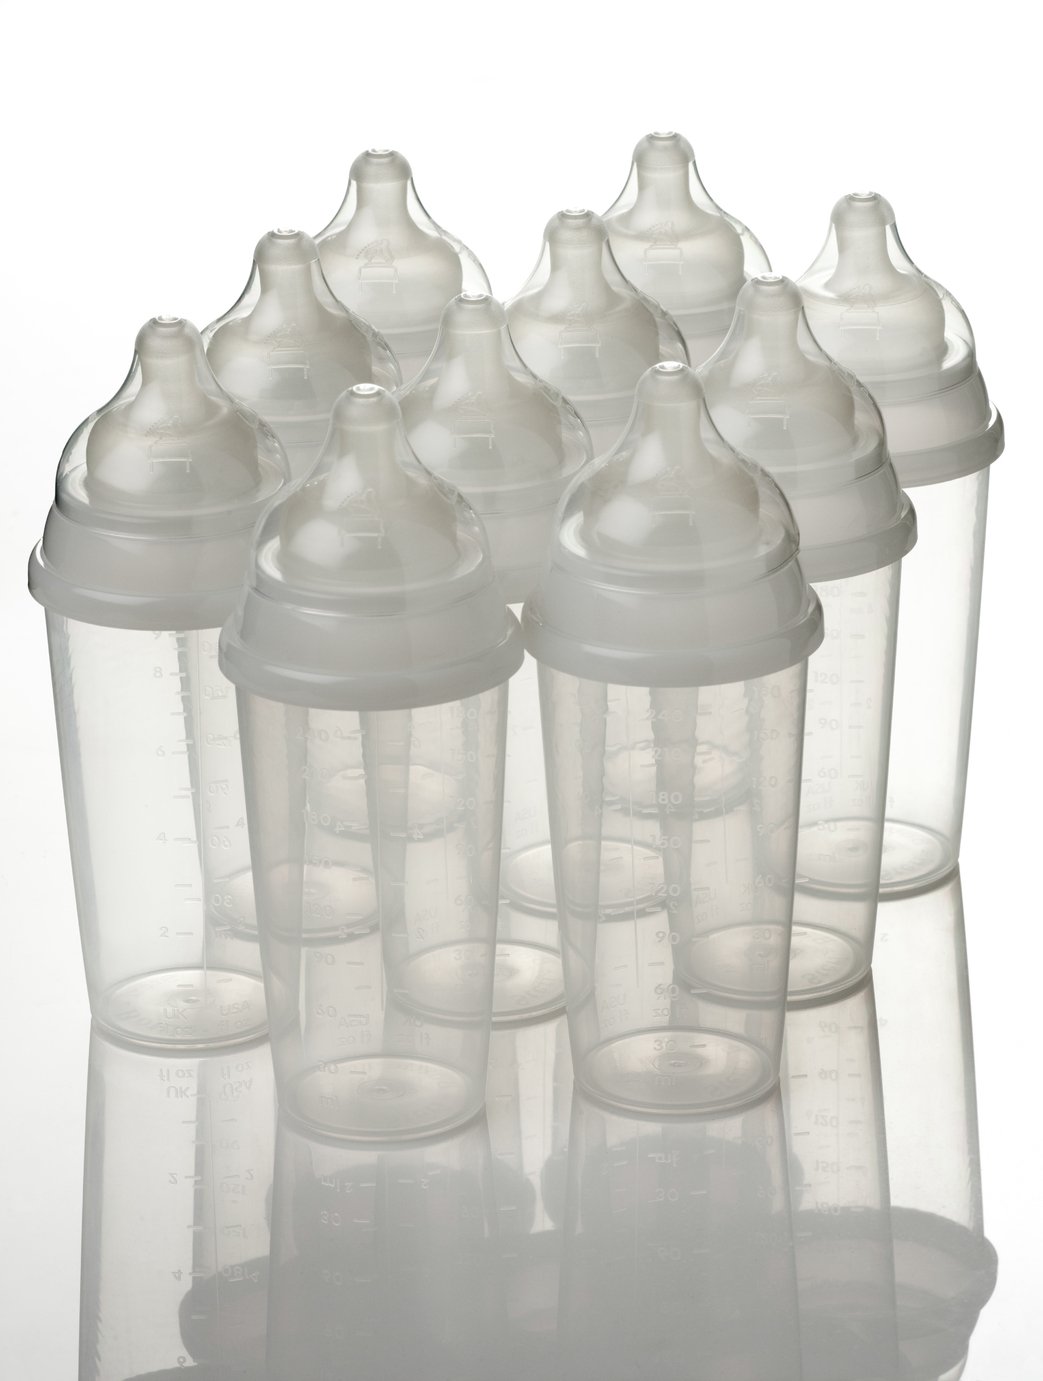 Steri-bottle Set of 10 Single Use Baby Bottles Review